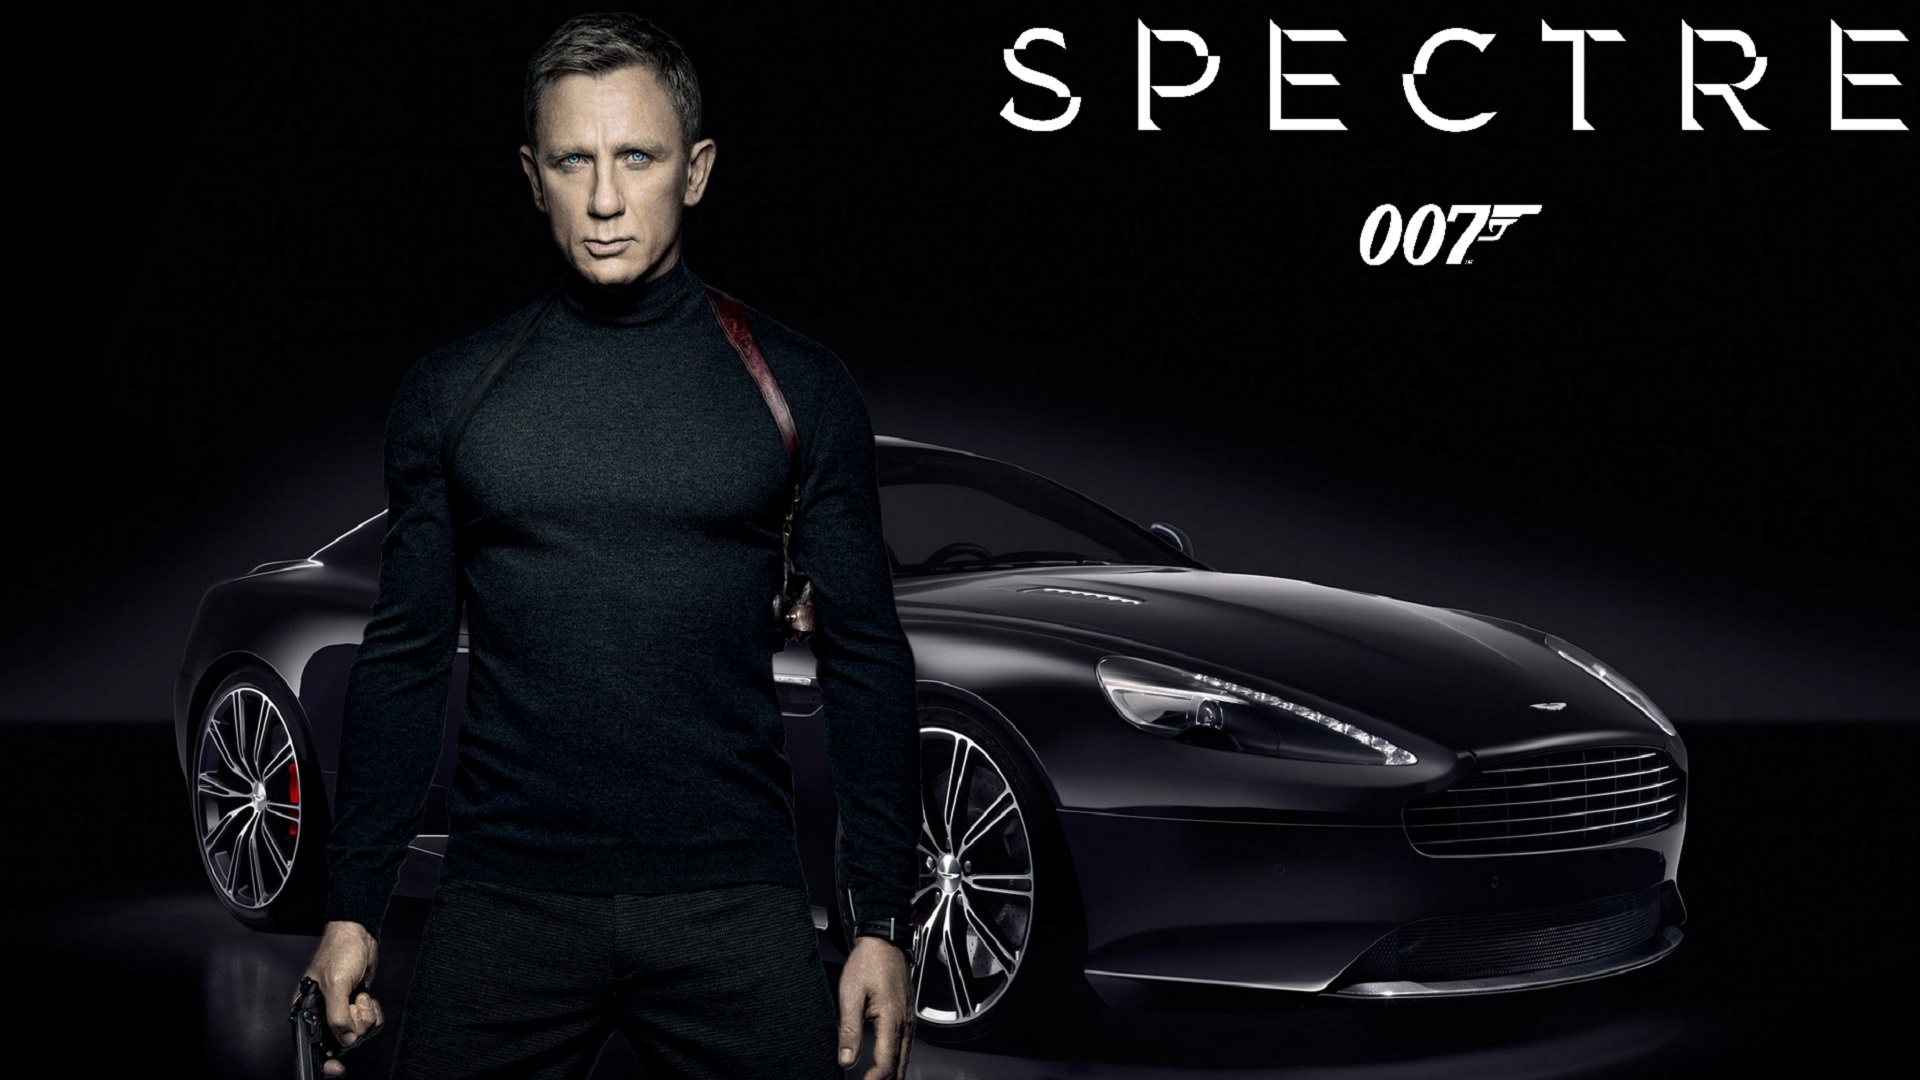 James Bond Spectre, Striking wallpaper, Iconic imagery, Action-packed scenes, 1920x1080 Full HD Desktop